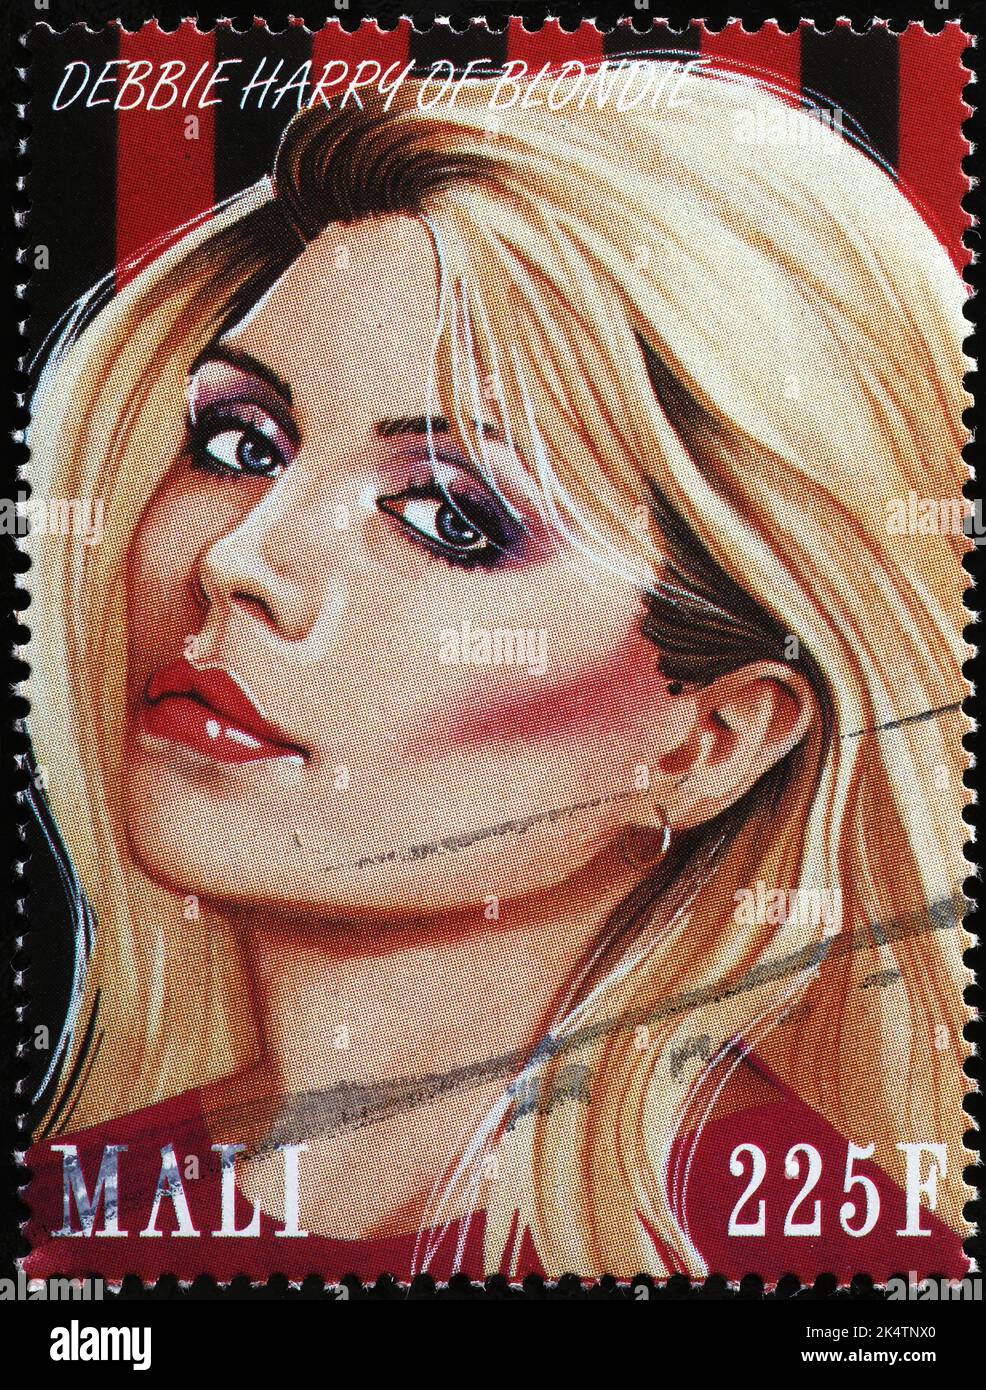 Debbie Harry of Blondie on postage stamp if Mali Stock Photo